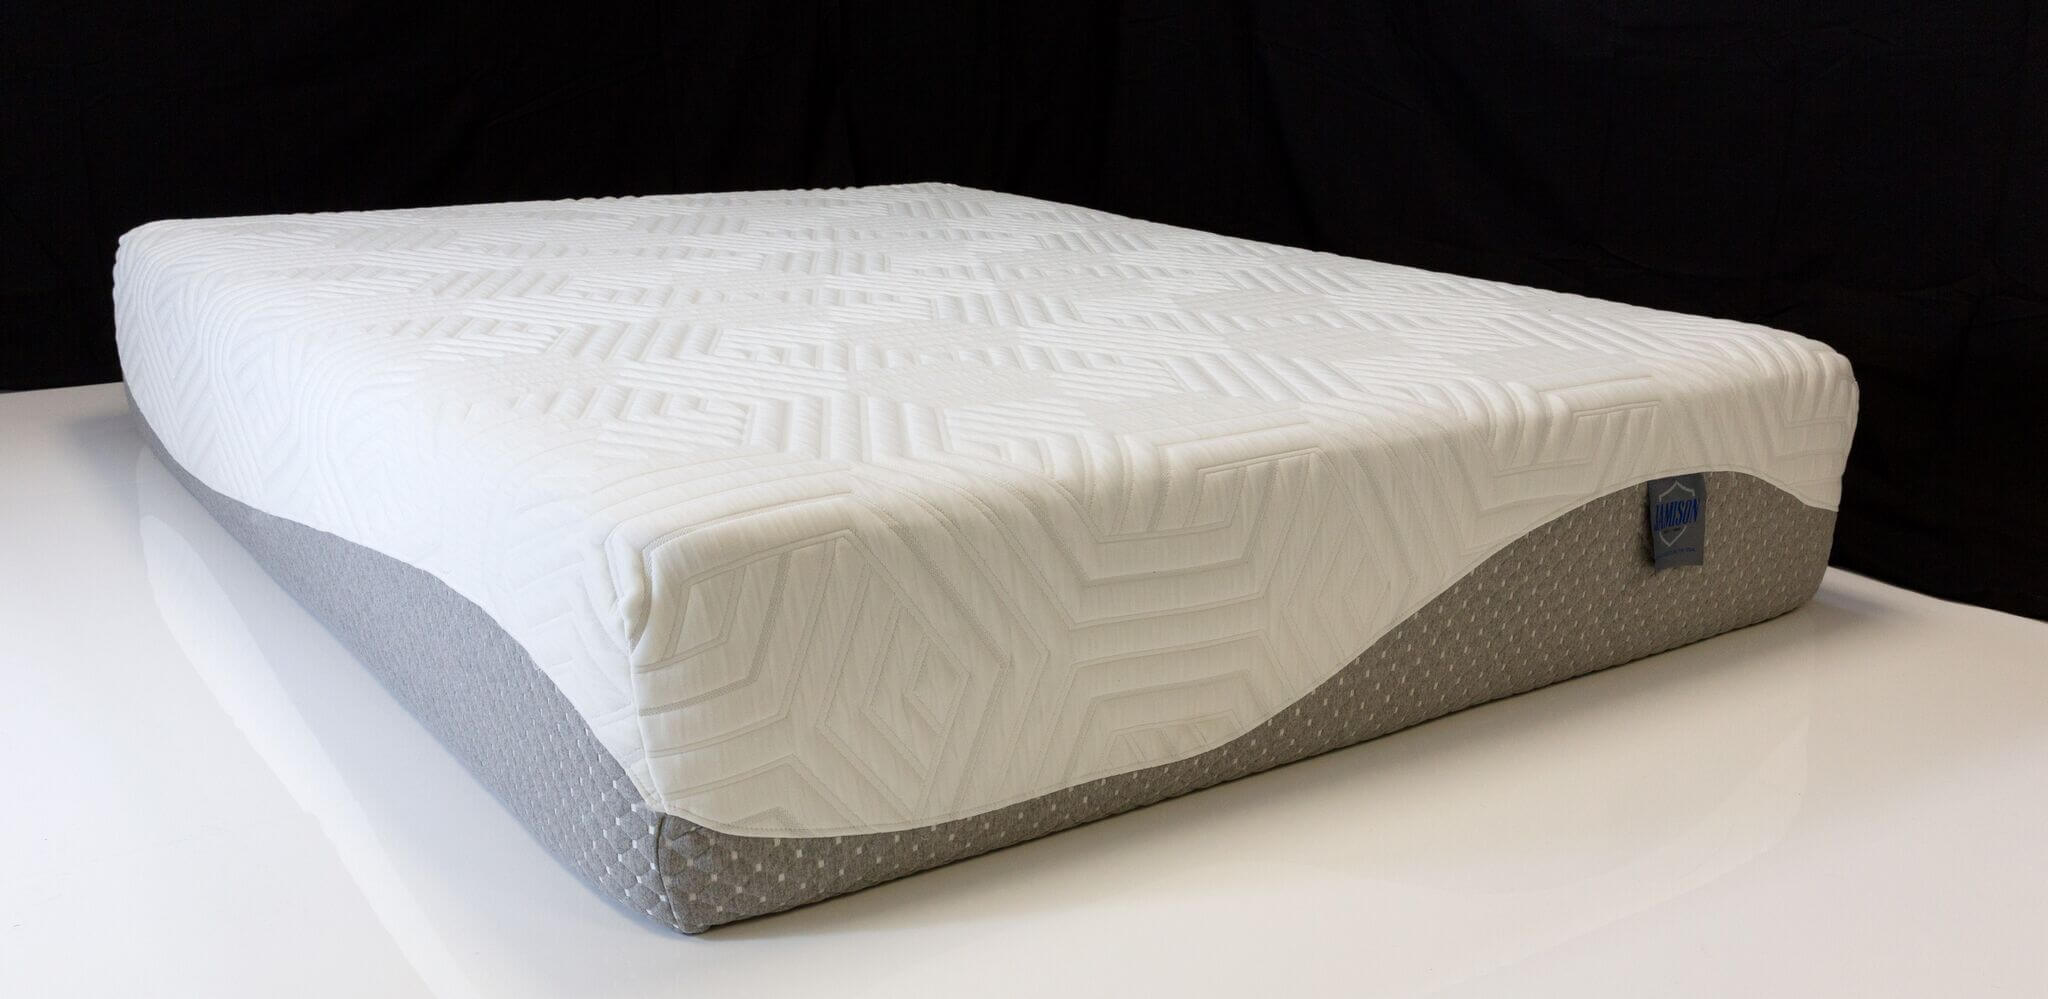 jamison pillow top latex mattress